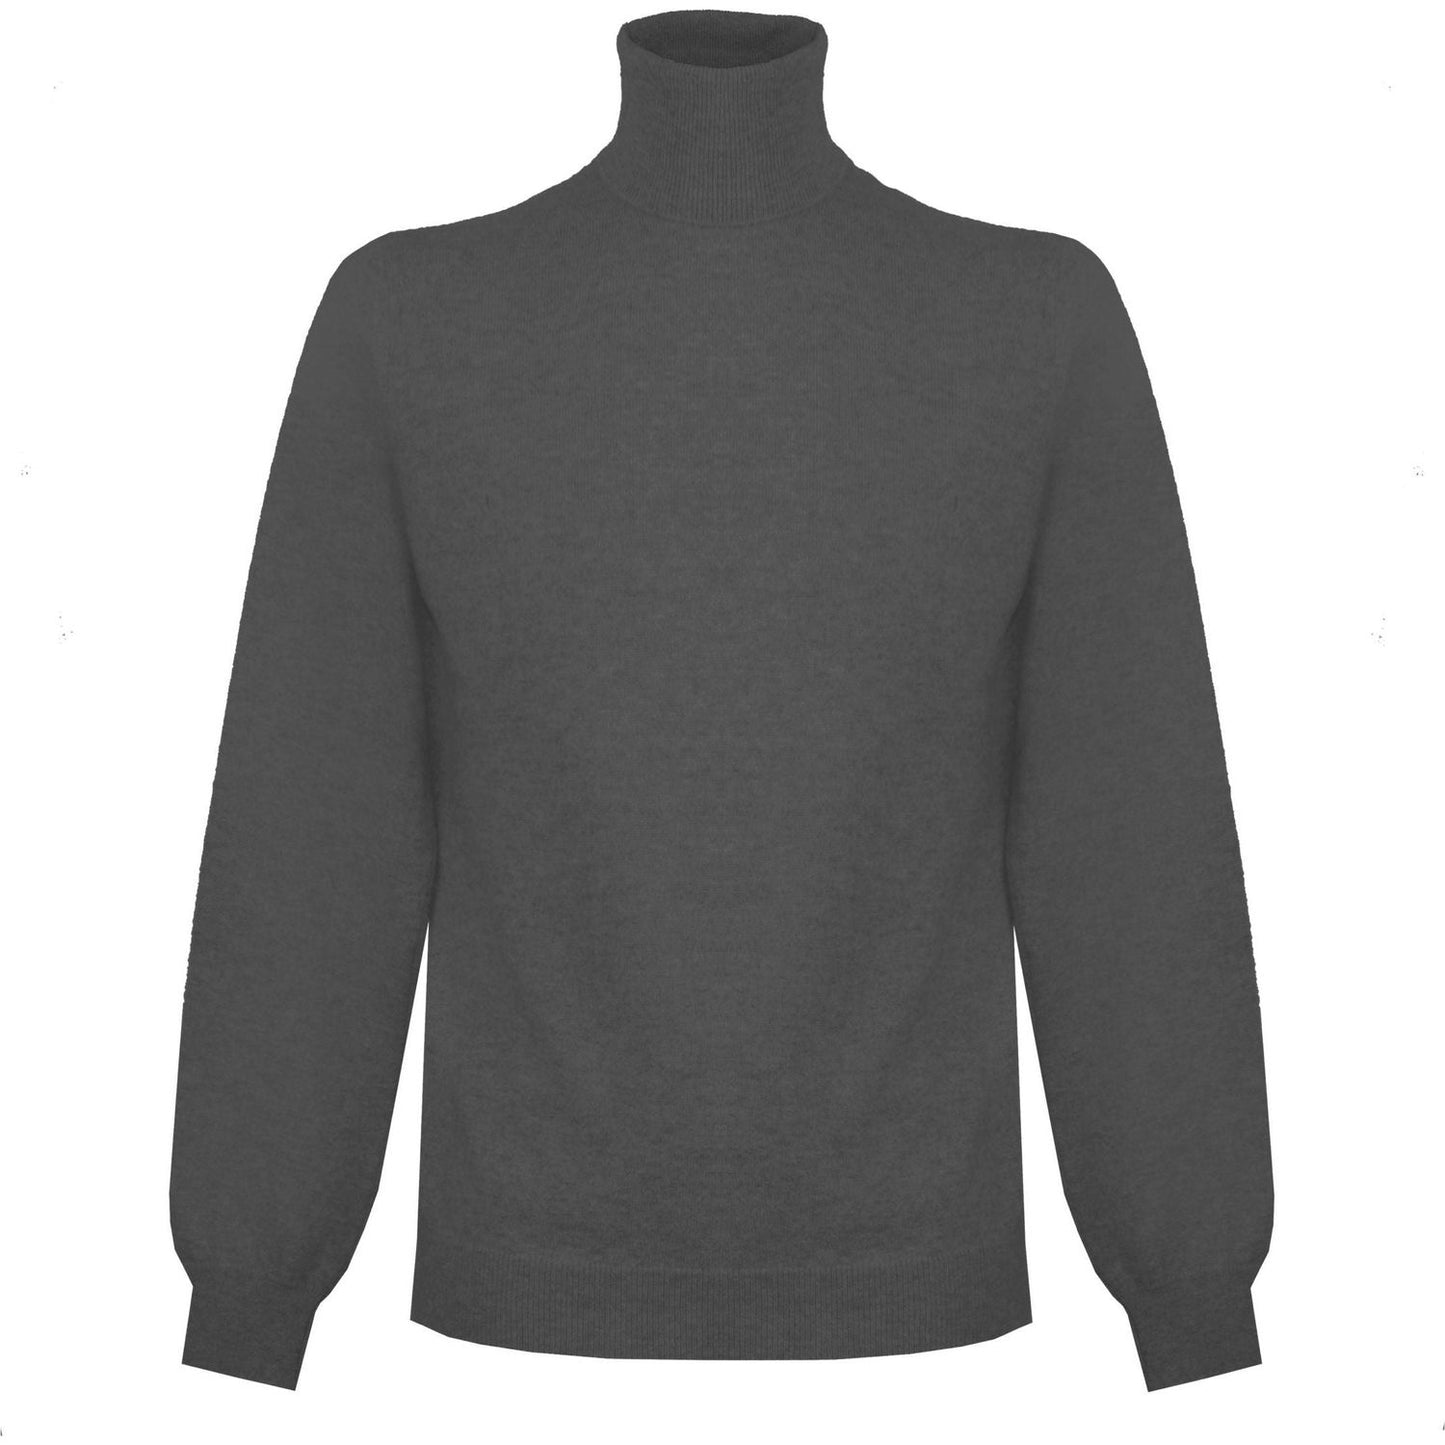 Malo Italian Cashmere High Neck Sweater - Gray gray-cashmere-sweater-2 MAN SWEATERS product-7512-2062063909-1-scaled-4af13174-383.jpg